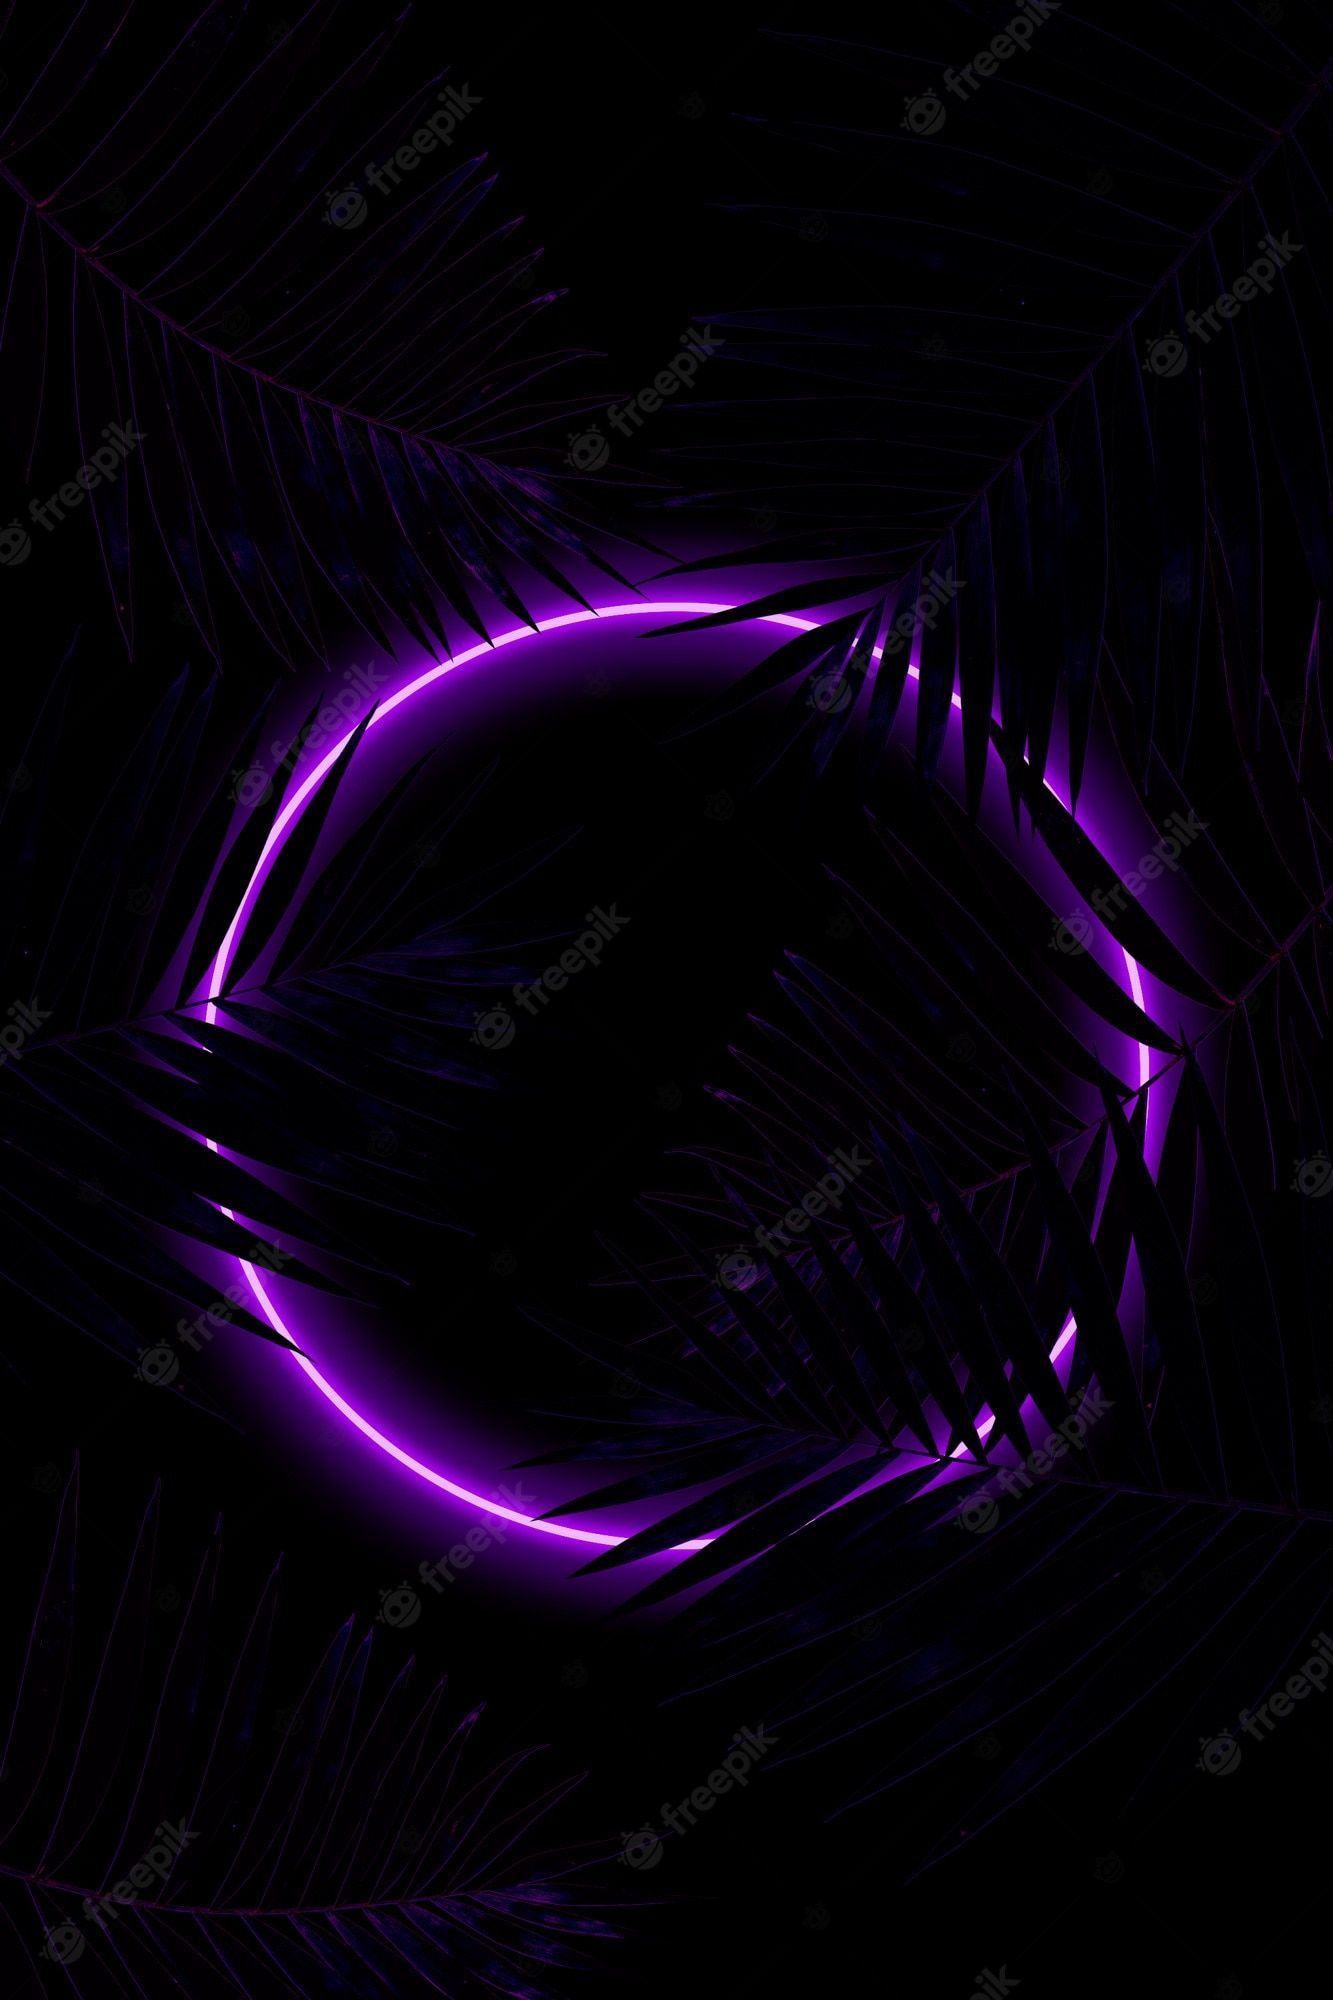 Purple neon light on a black background with palm leaves - Dark vaporwave